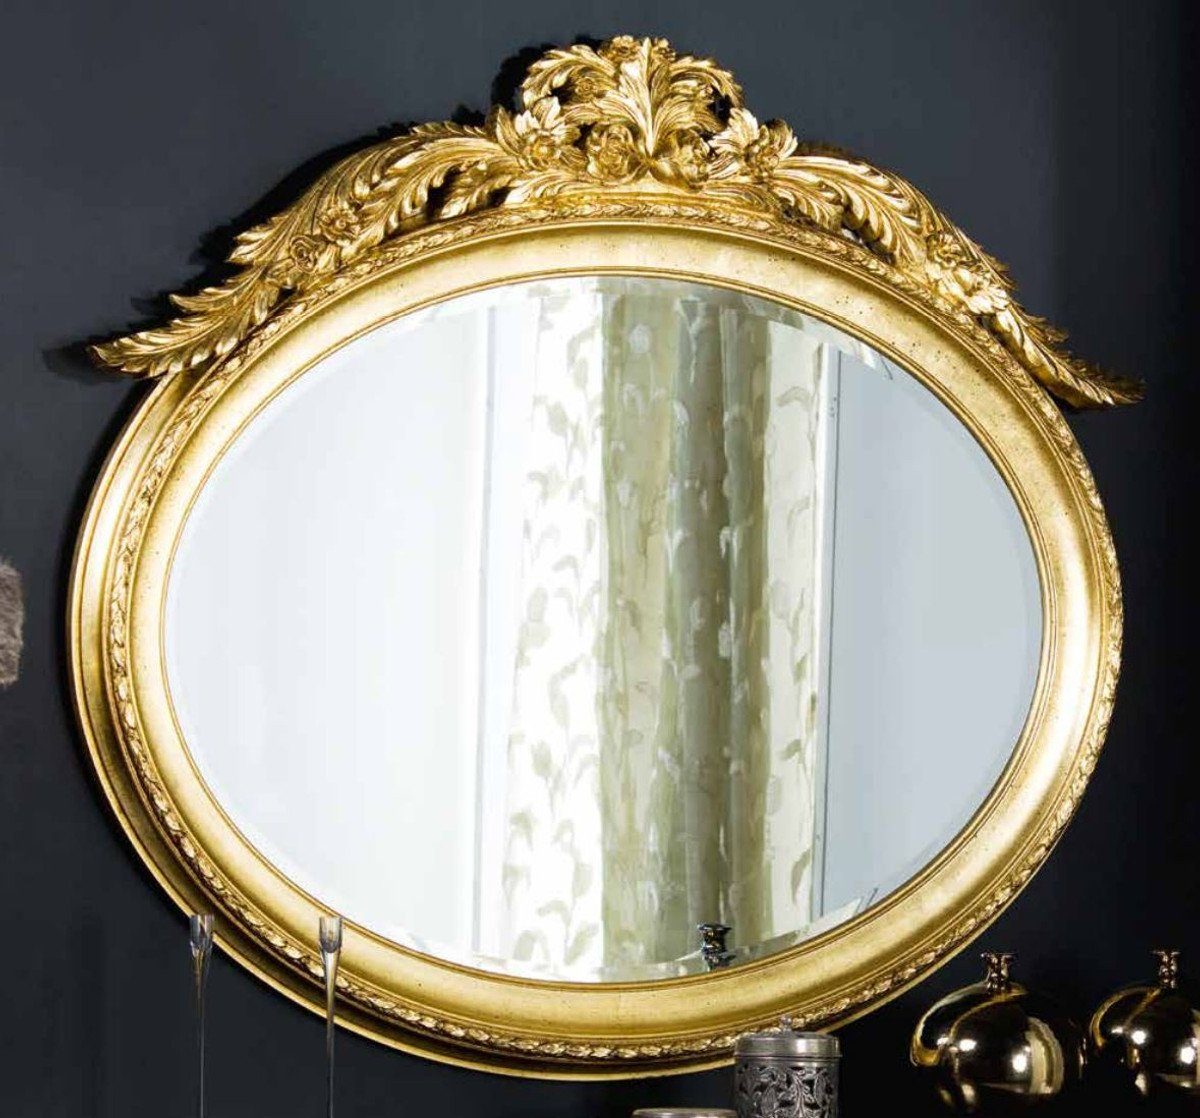 - Luxus Italy Qualität Luxus Gold Ovaler Barock Möbel Casa Made - Spiegel im Wandspiegel Barock Padrino Barockstil in Barockspiegel - -